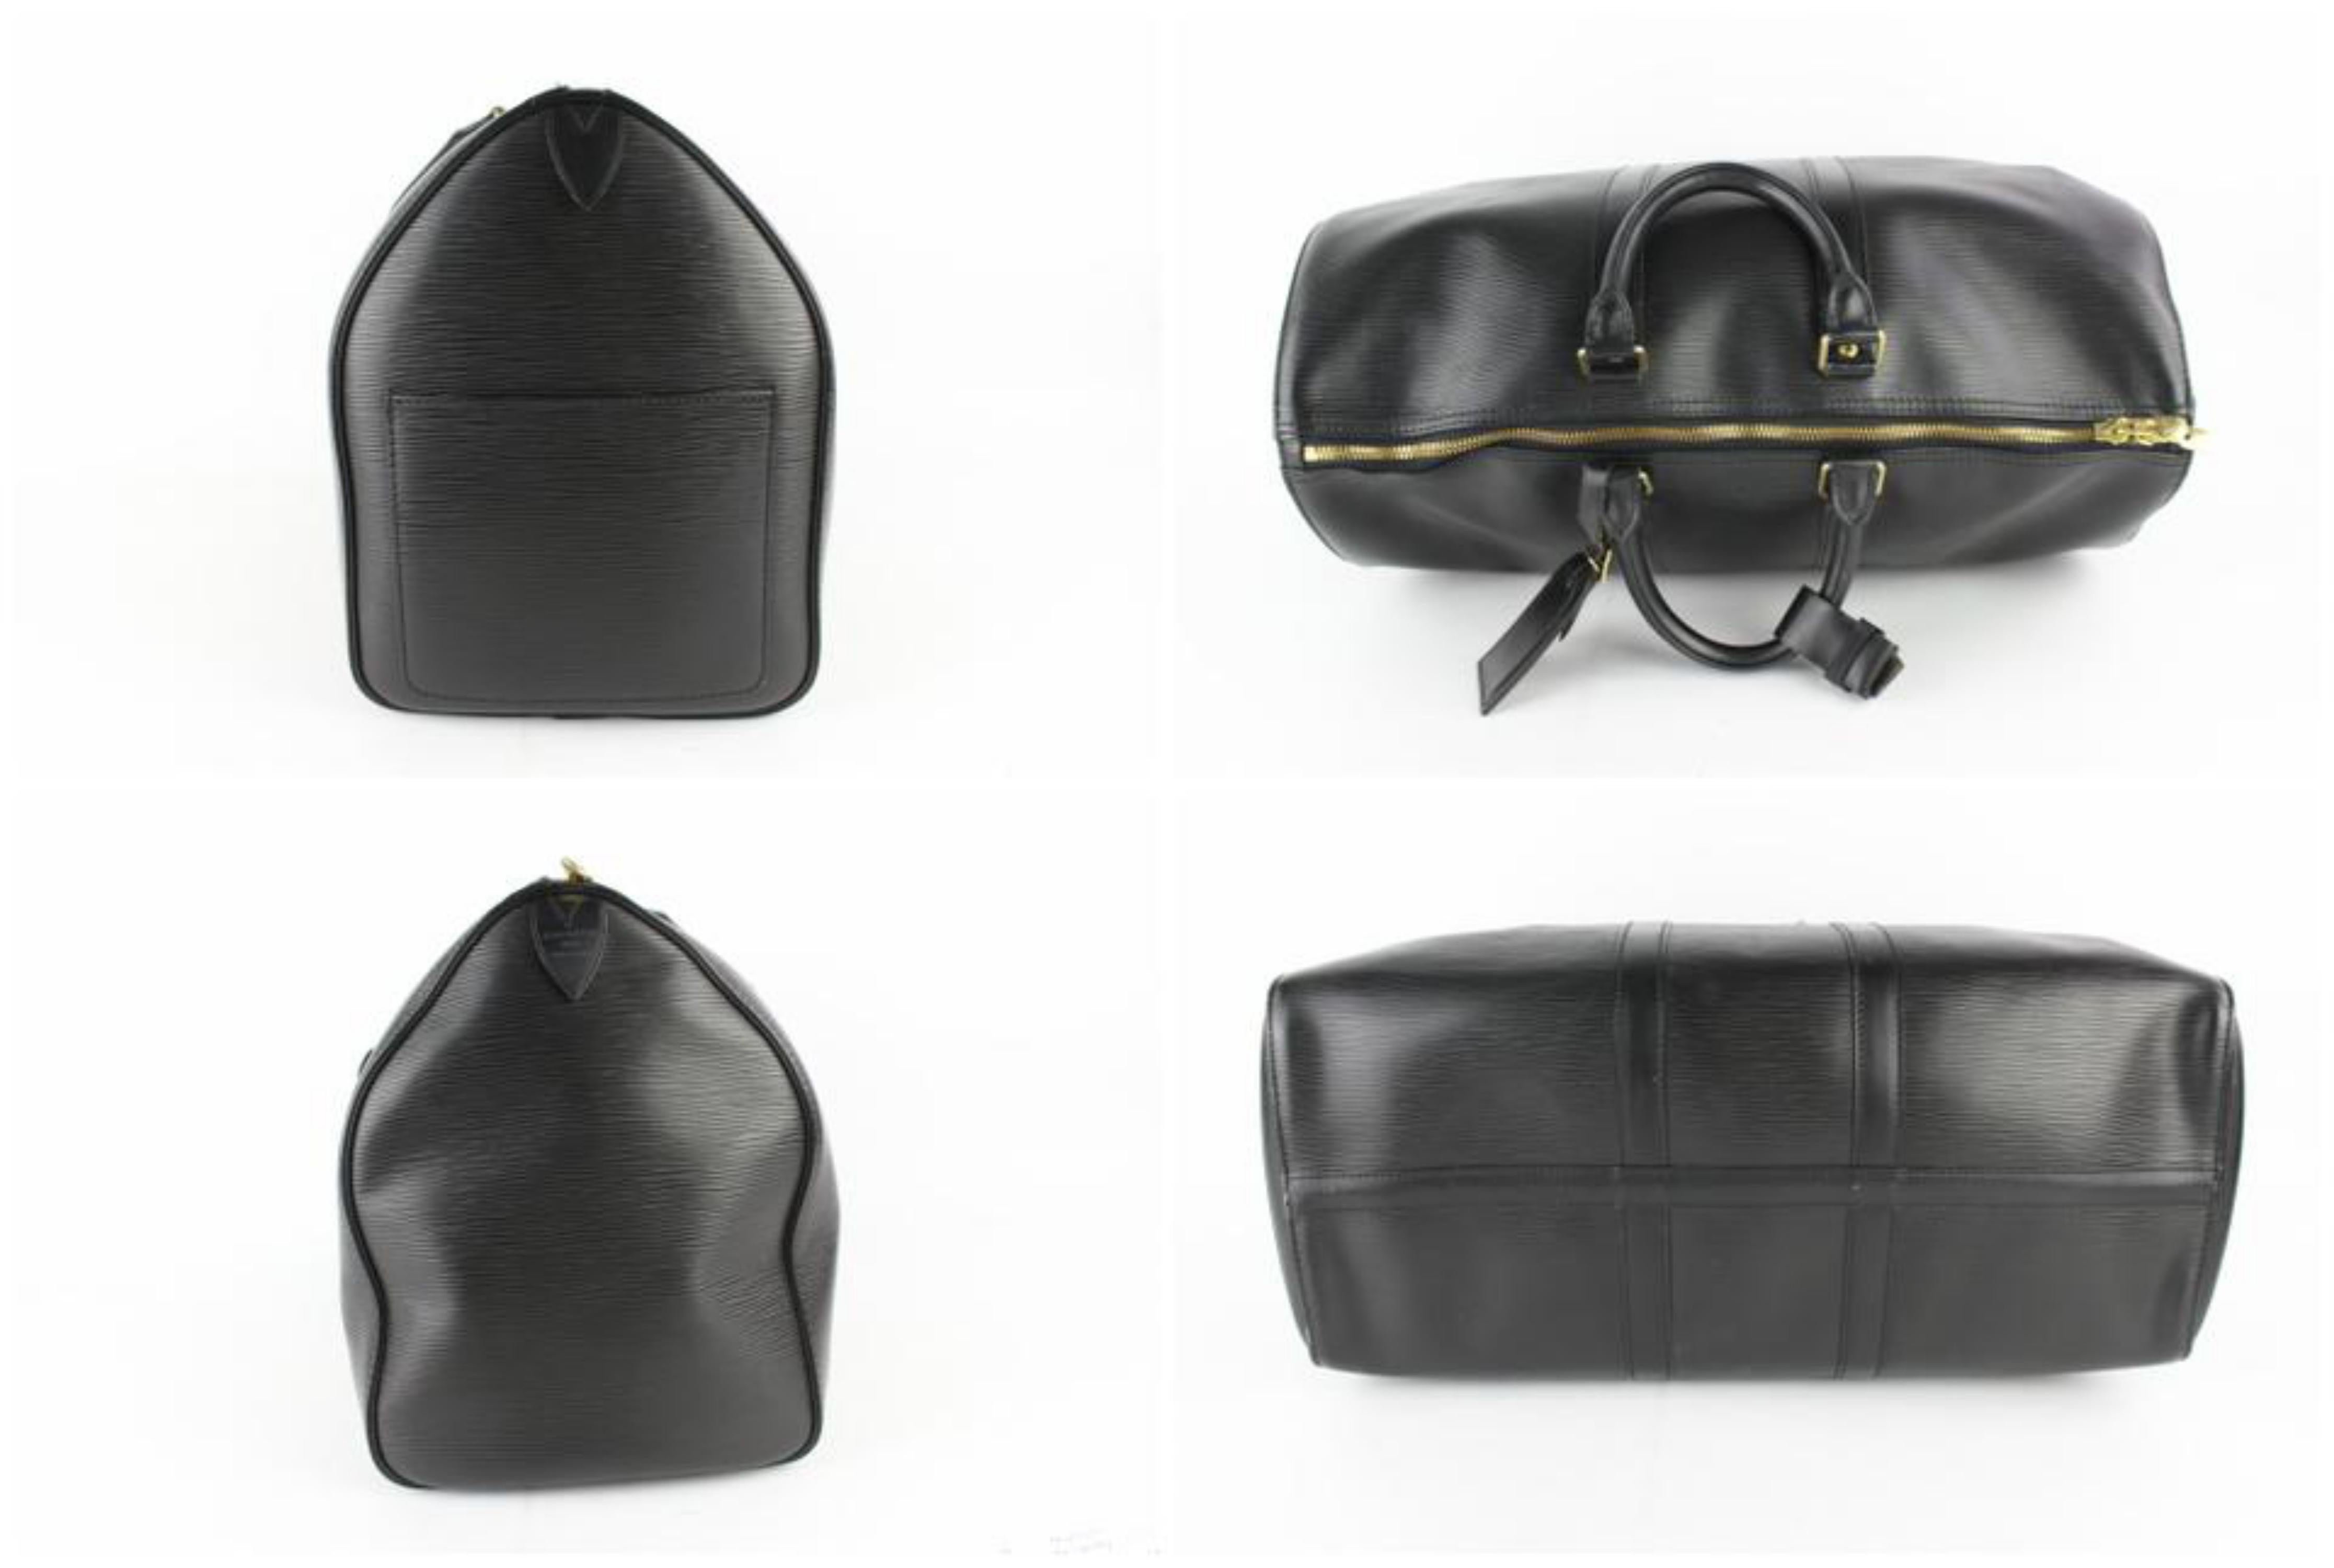 Louis Vuitton Keepall Duffle Noir 45 5lz0129 Black Leather Weekend/Travel Bag For Sale 3